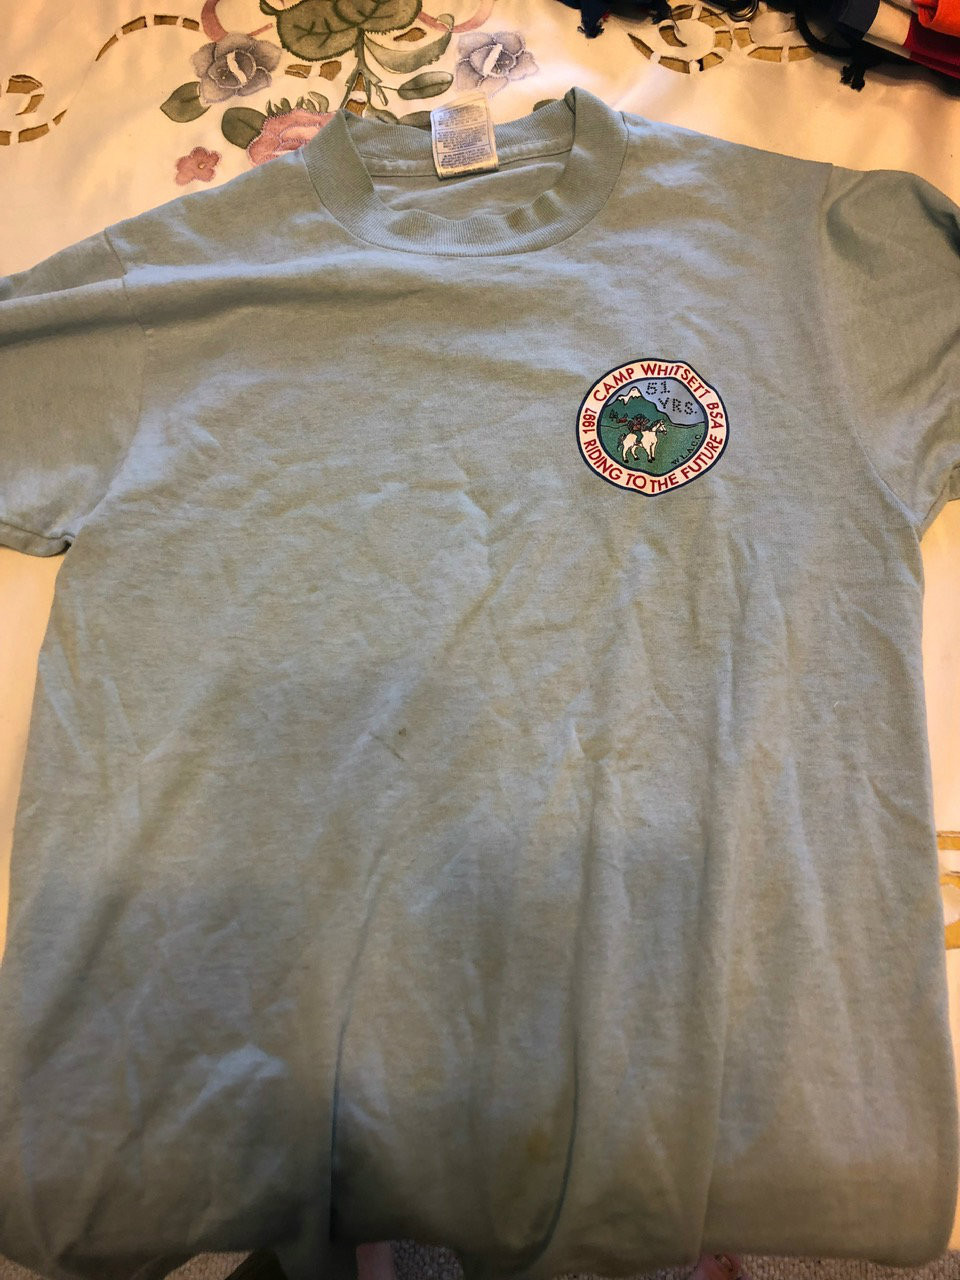 1997 Camp Whitsett Tee Shirt, Mens Small, Lite Use